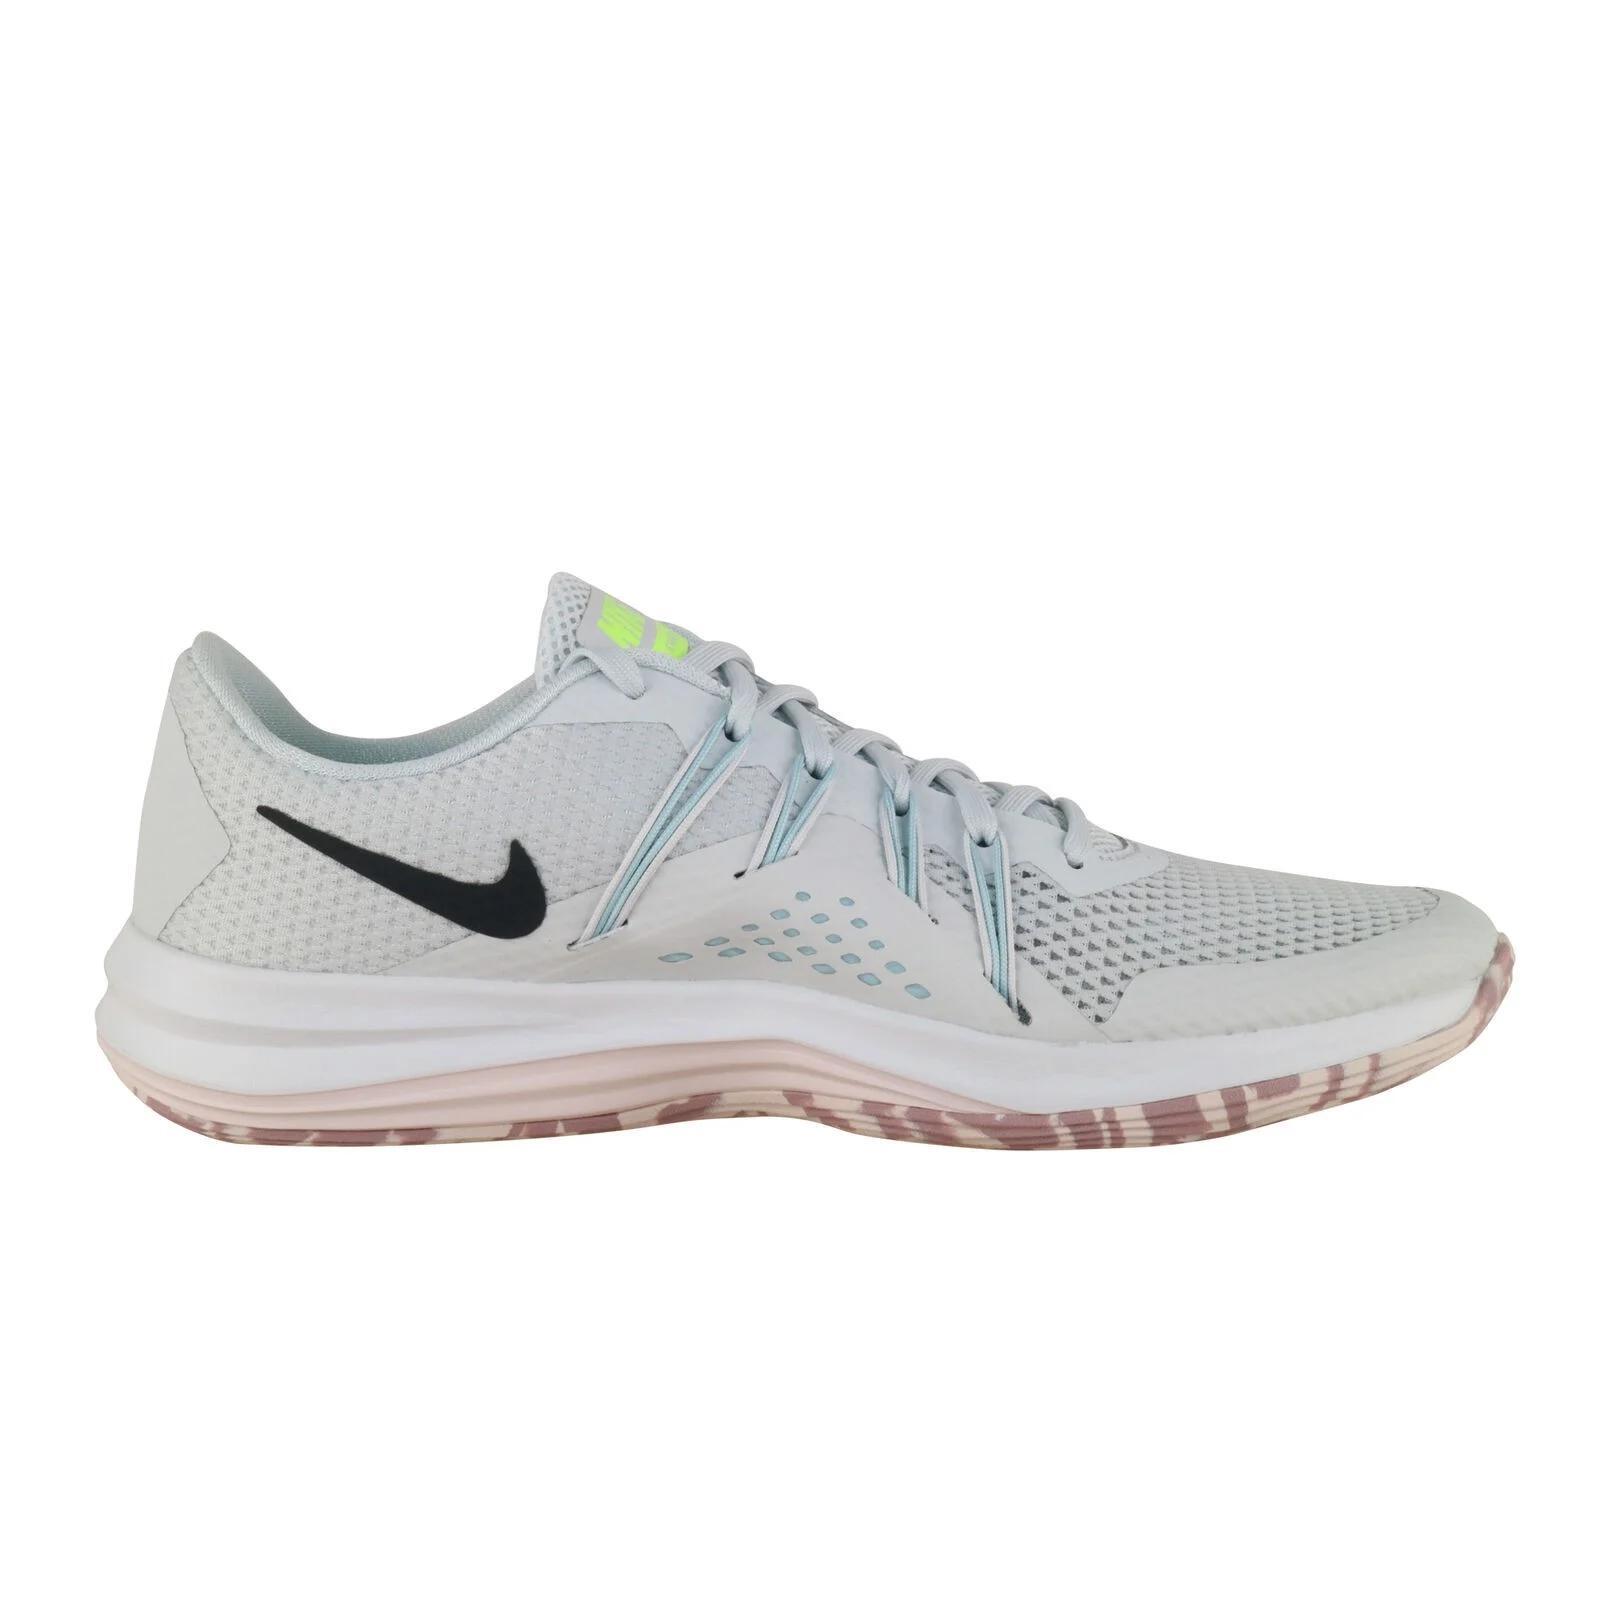 Giày tập luyện nữ Nike W Lunar Exceed Tr 909017-040